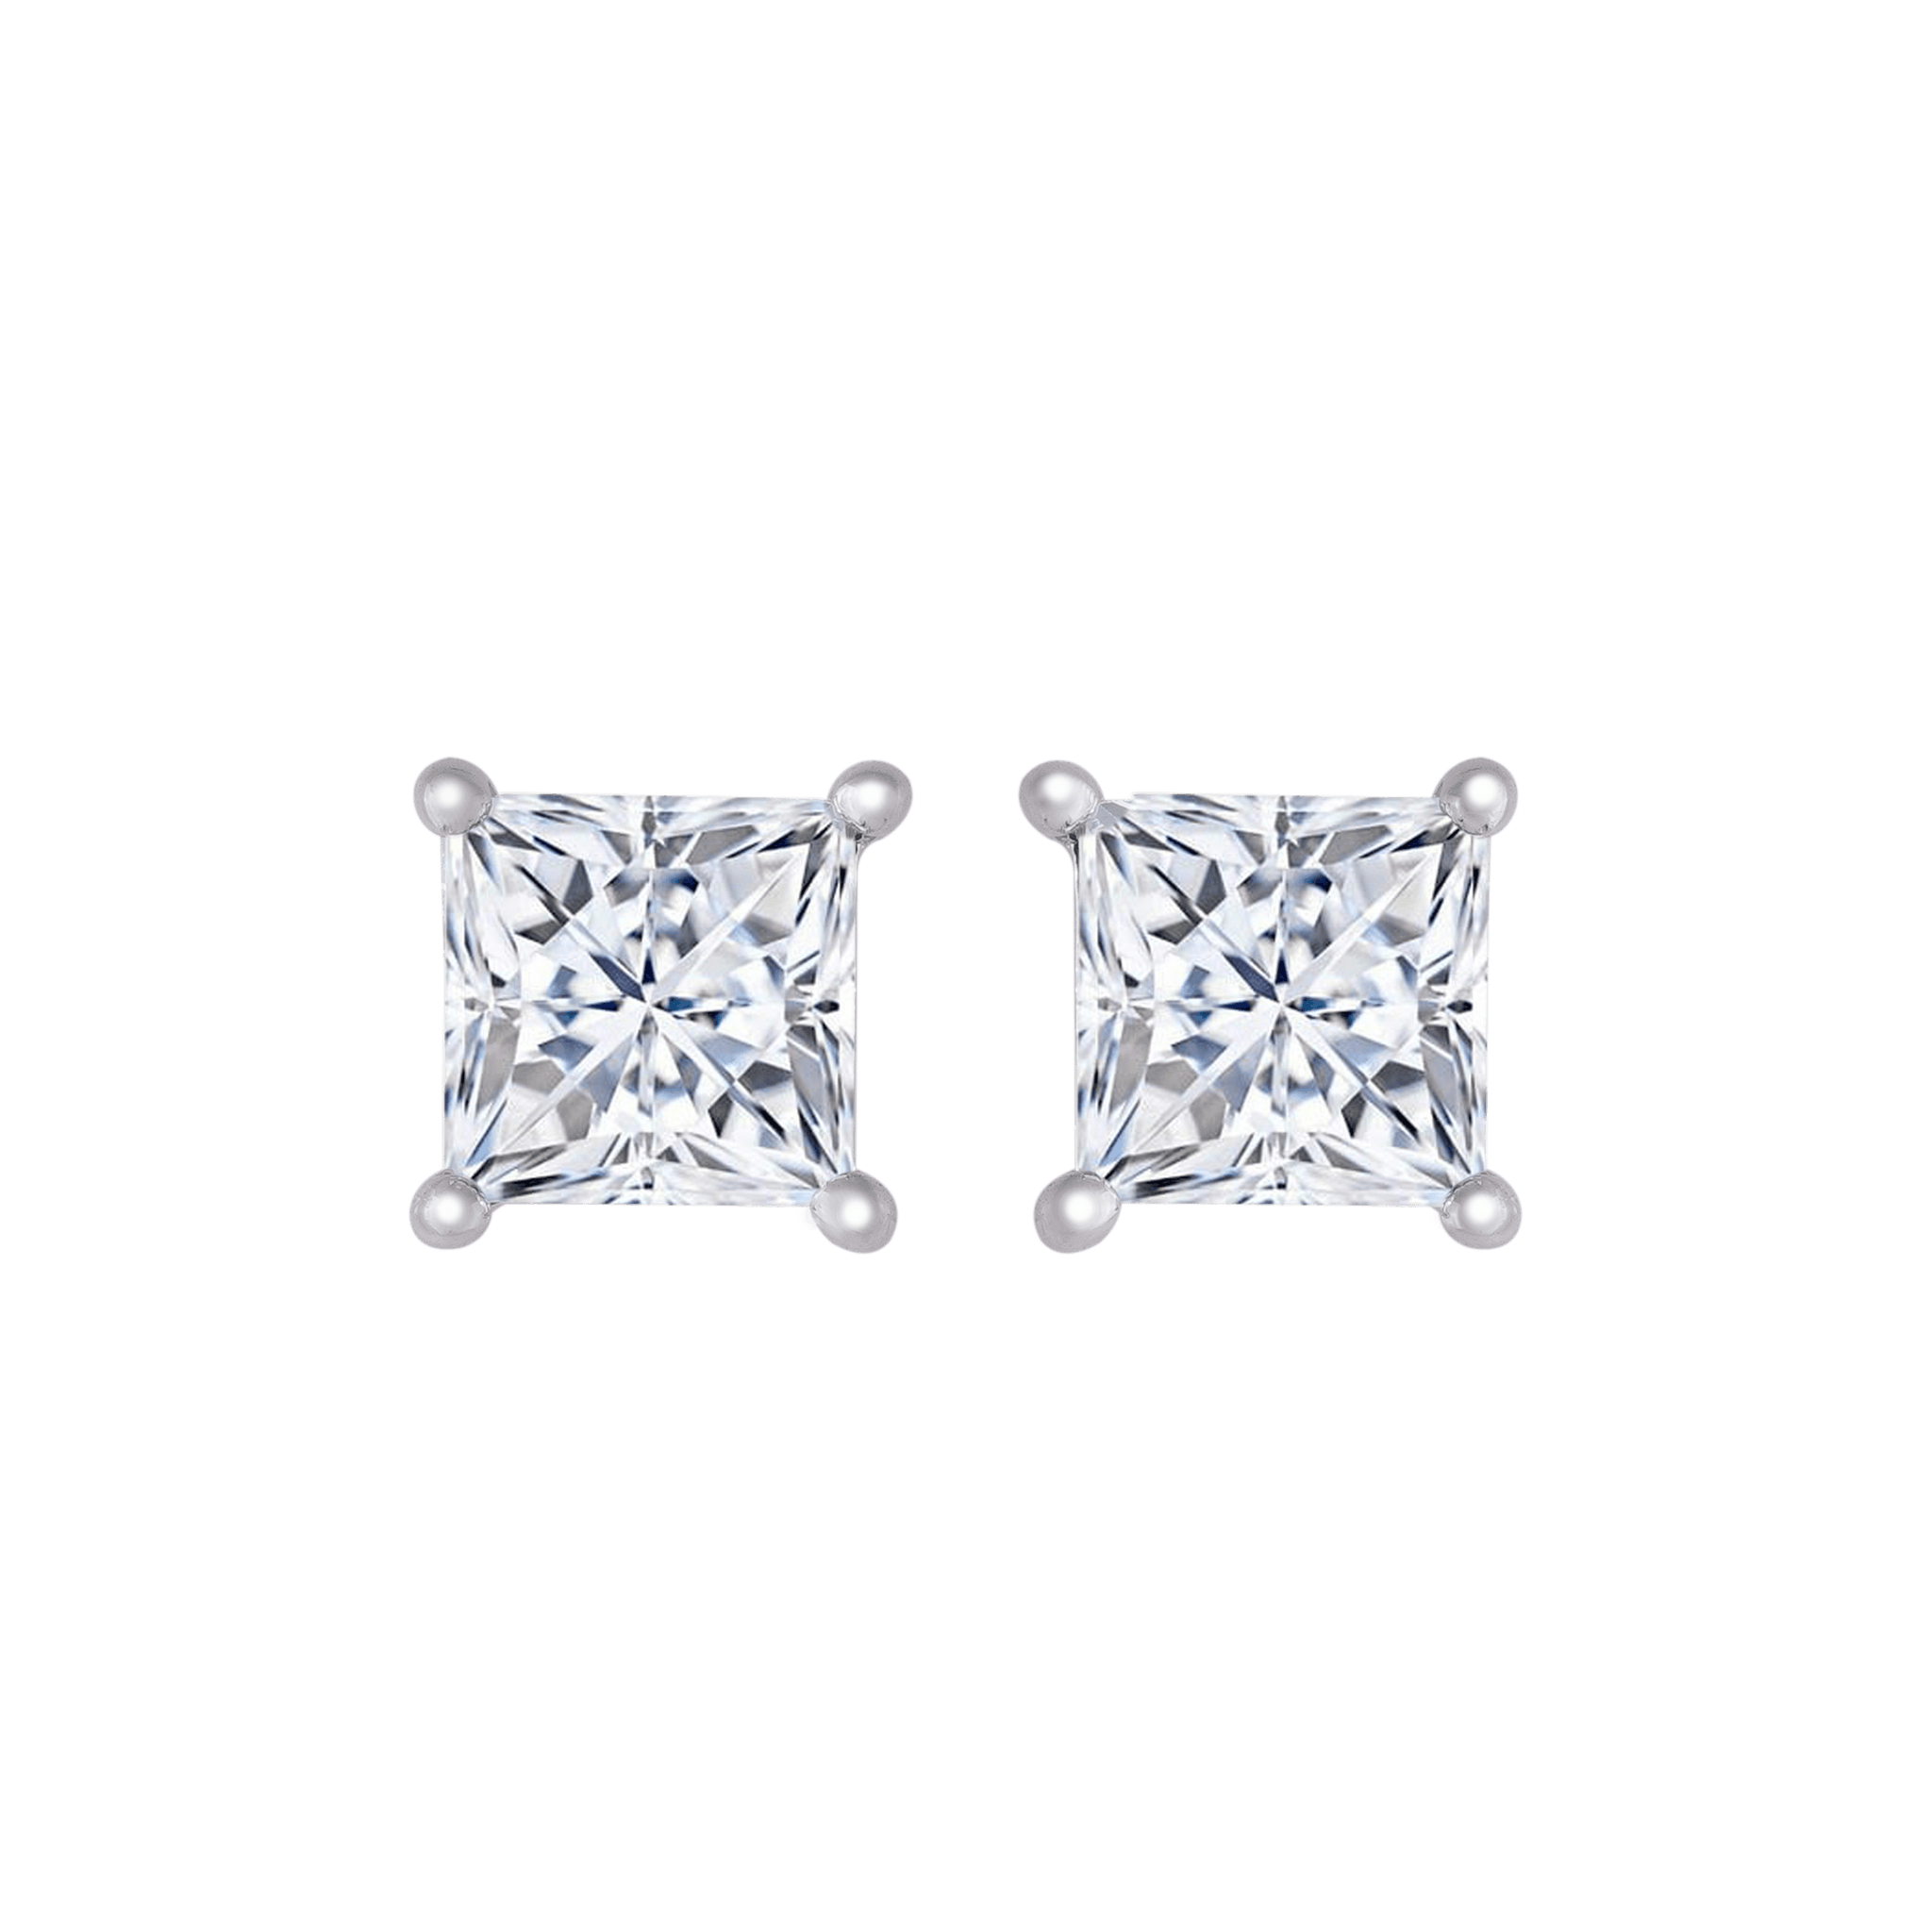 Simulated White Classic Princess Diamond Studs CZ Square Cut Earrings For Women In 925 Silver - YANA SILVER